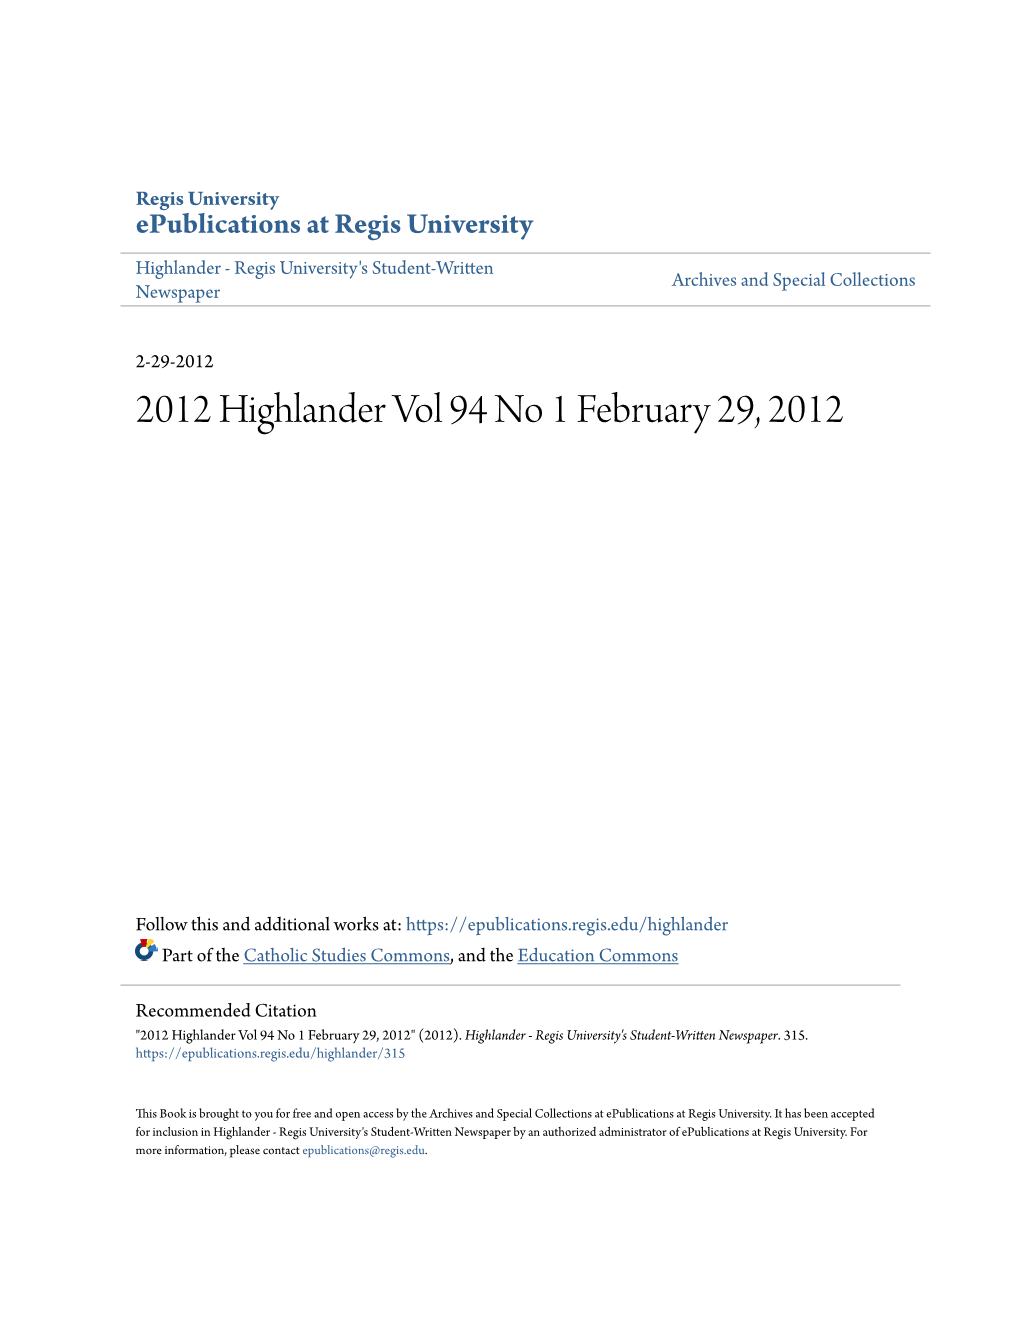 2012 Highlander Vol 94 No 1 February 29, 2012